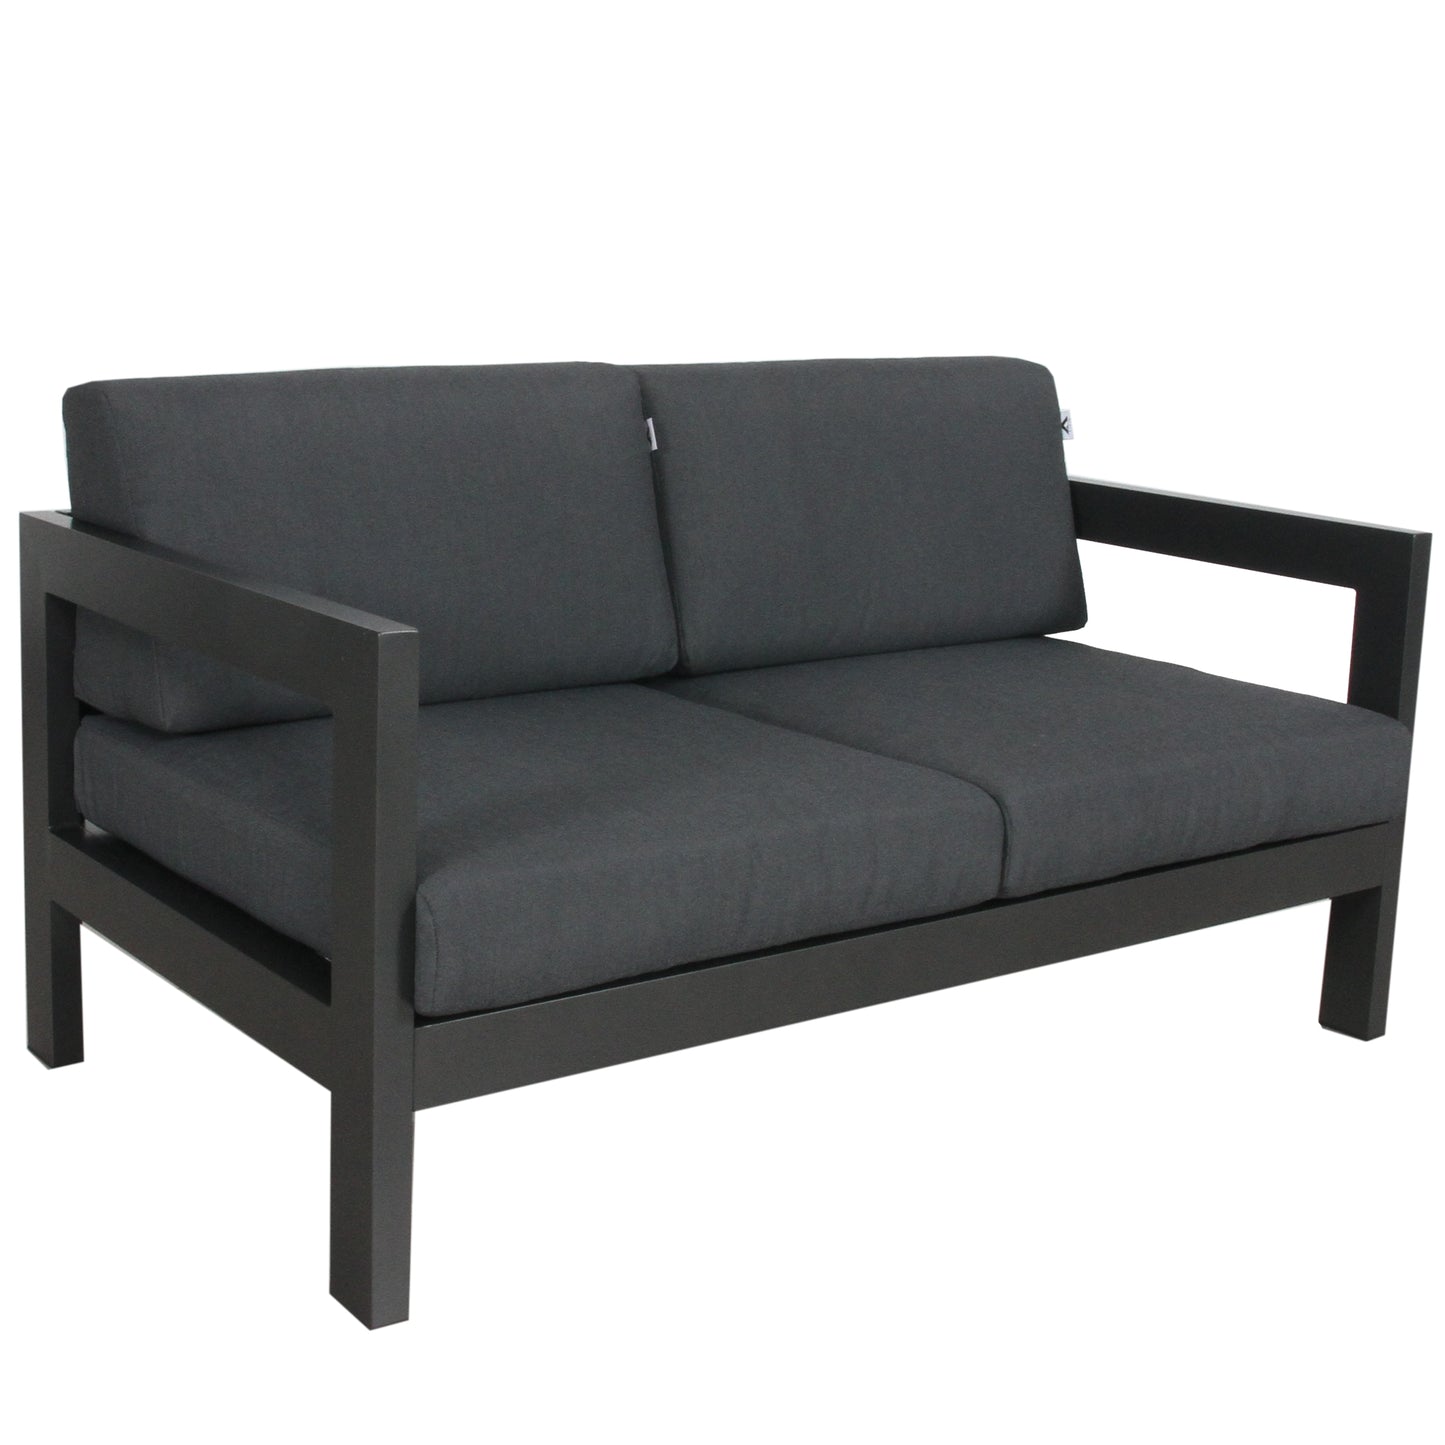 Outie 2pc Set 2+3 Seater Outdoor Sofa Lounge Aluminium Frame Charcoal